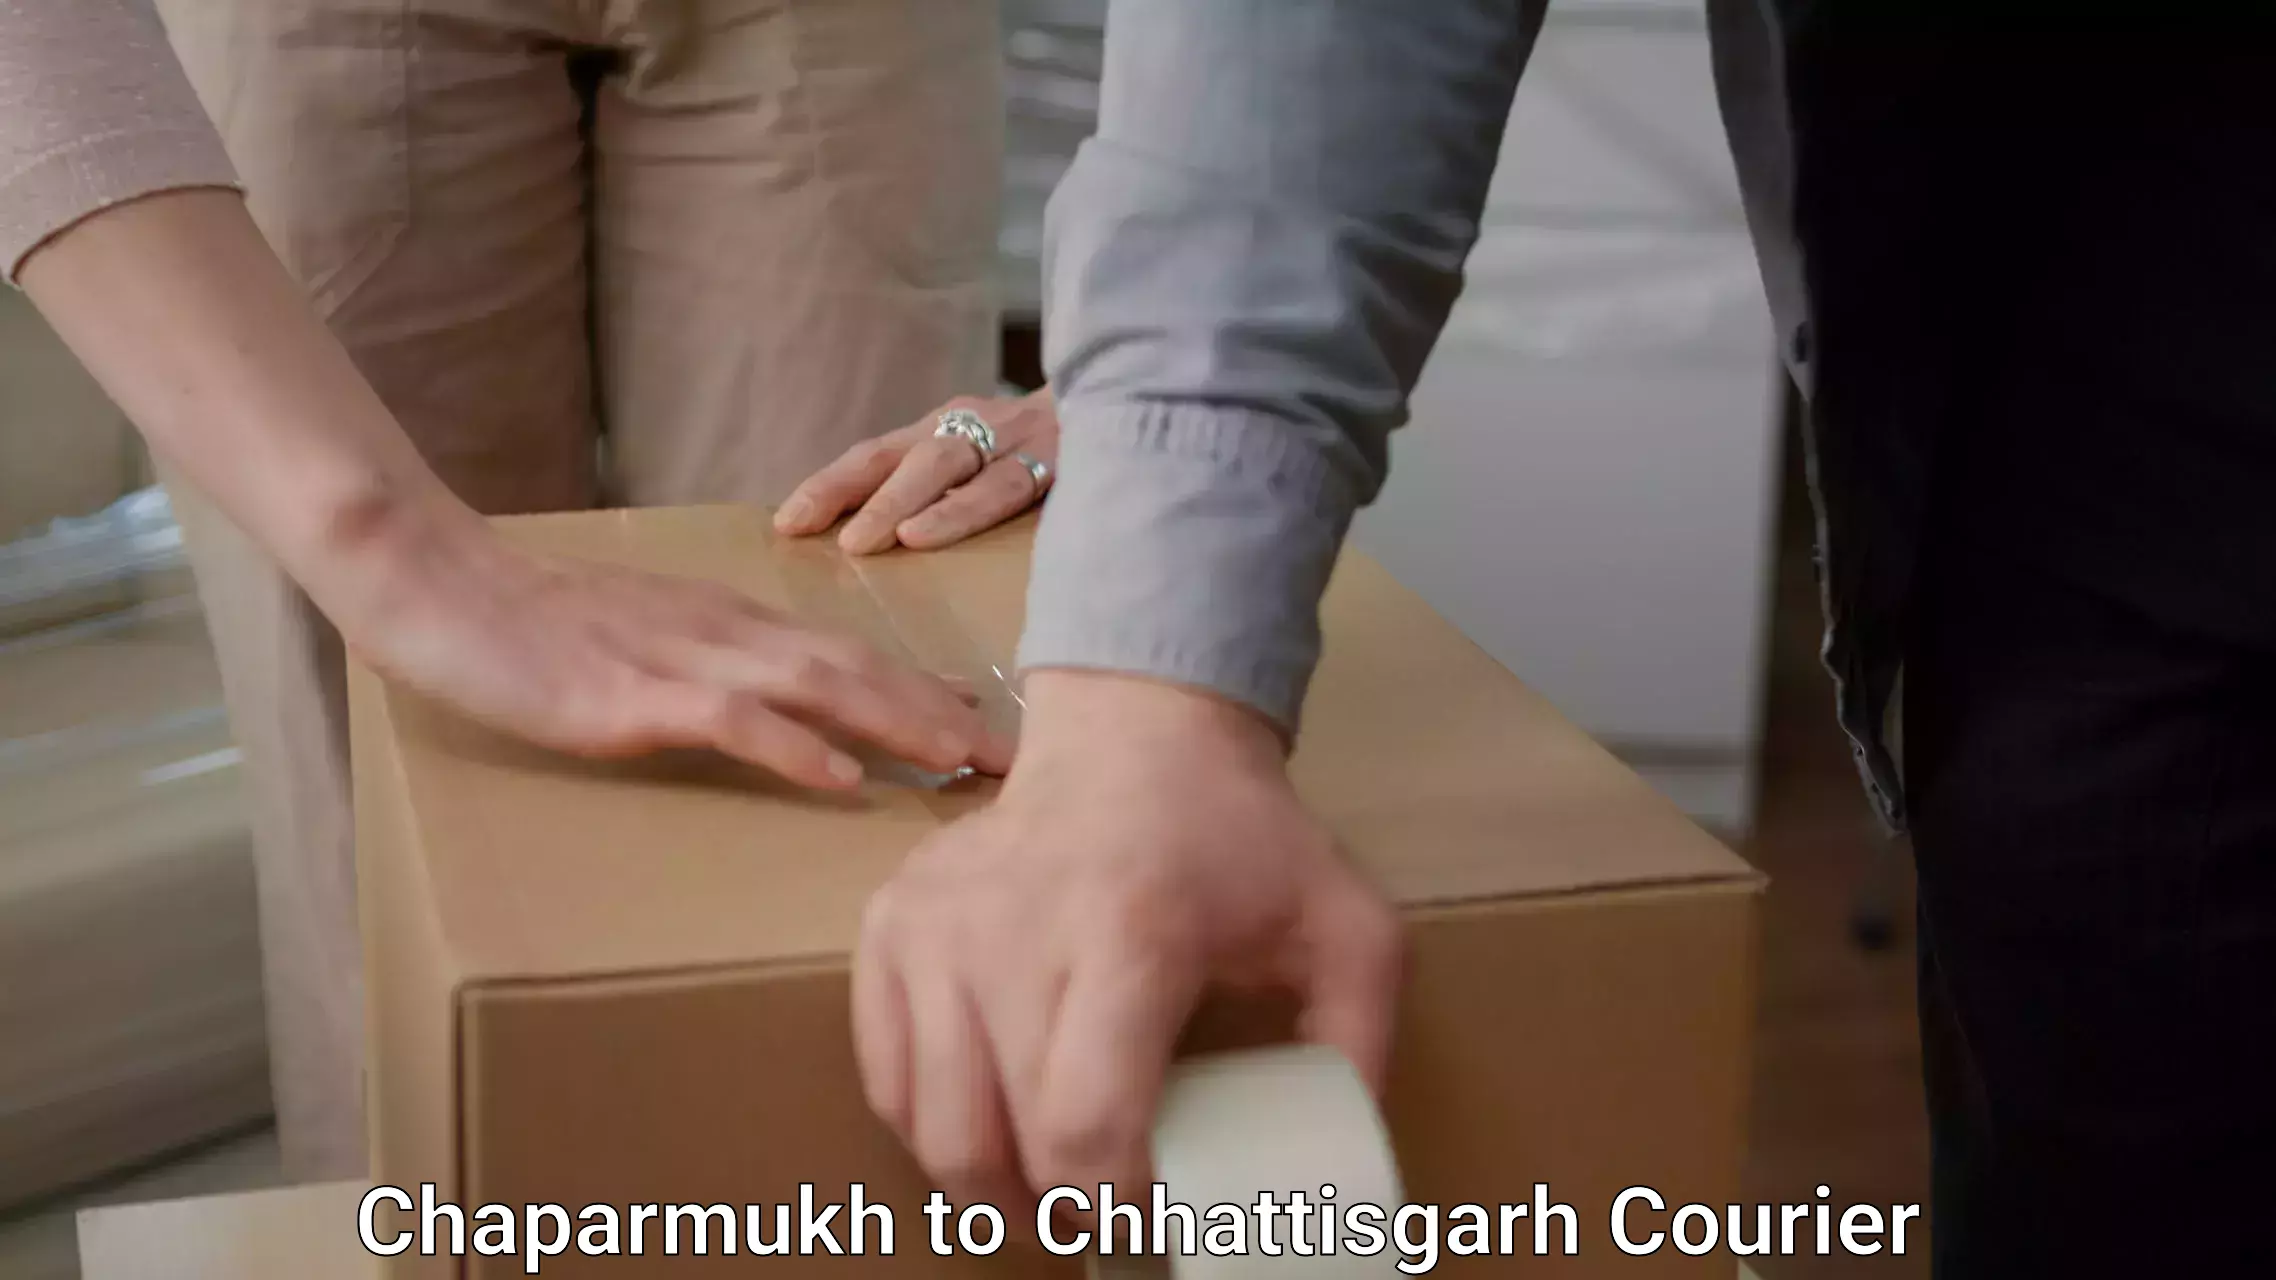 Customized moving experience Chaparmukh to Mahasamund